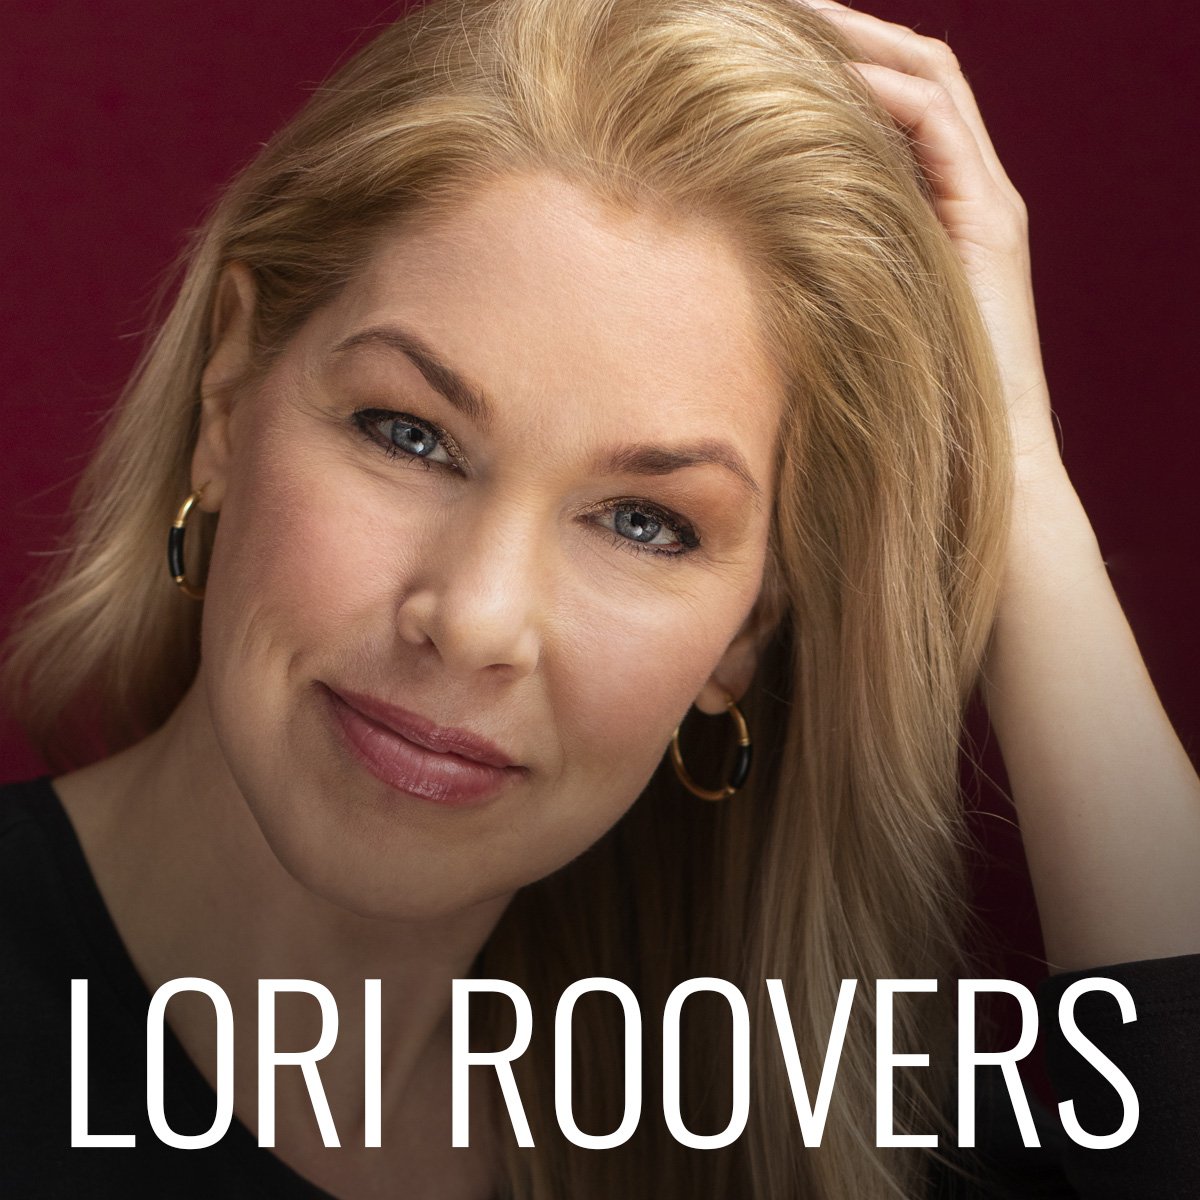 Lori Roovers